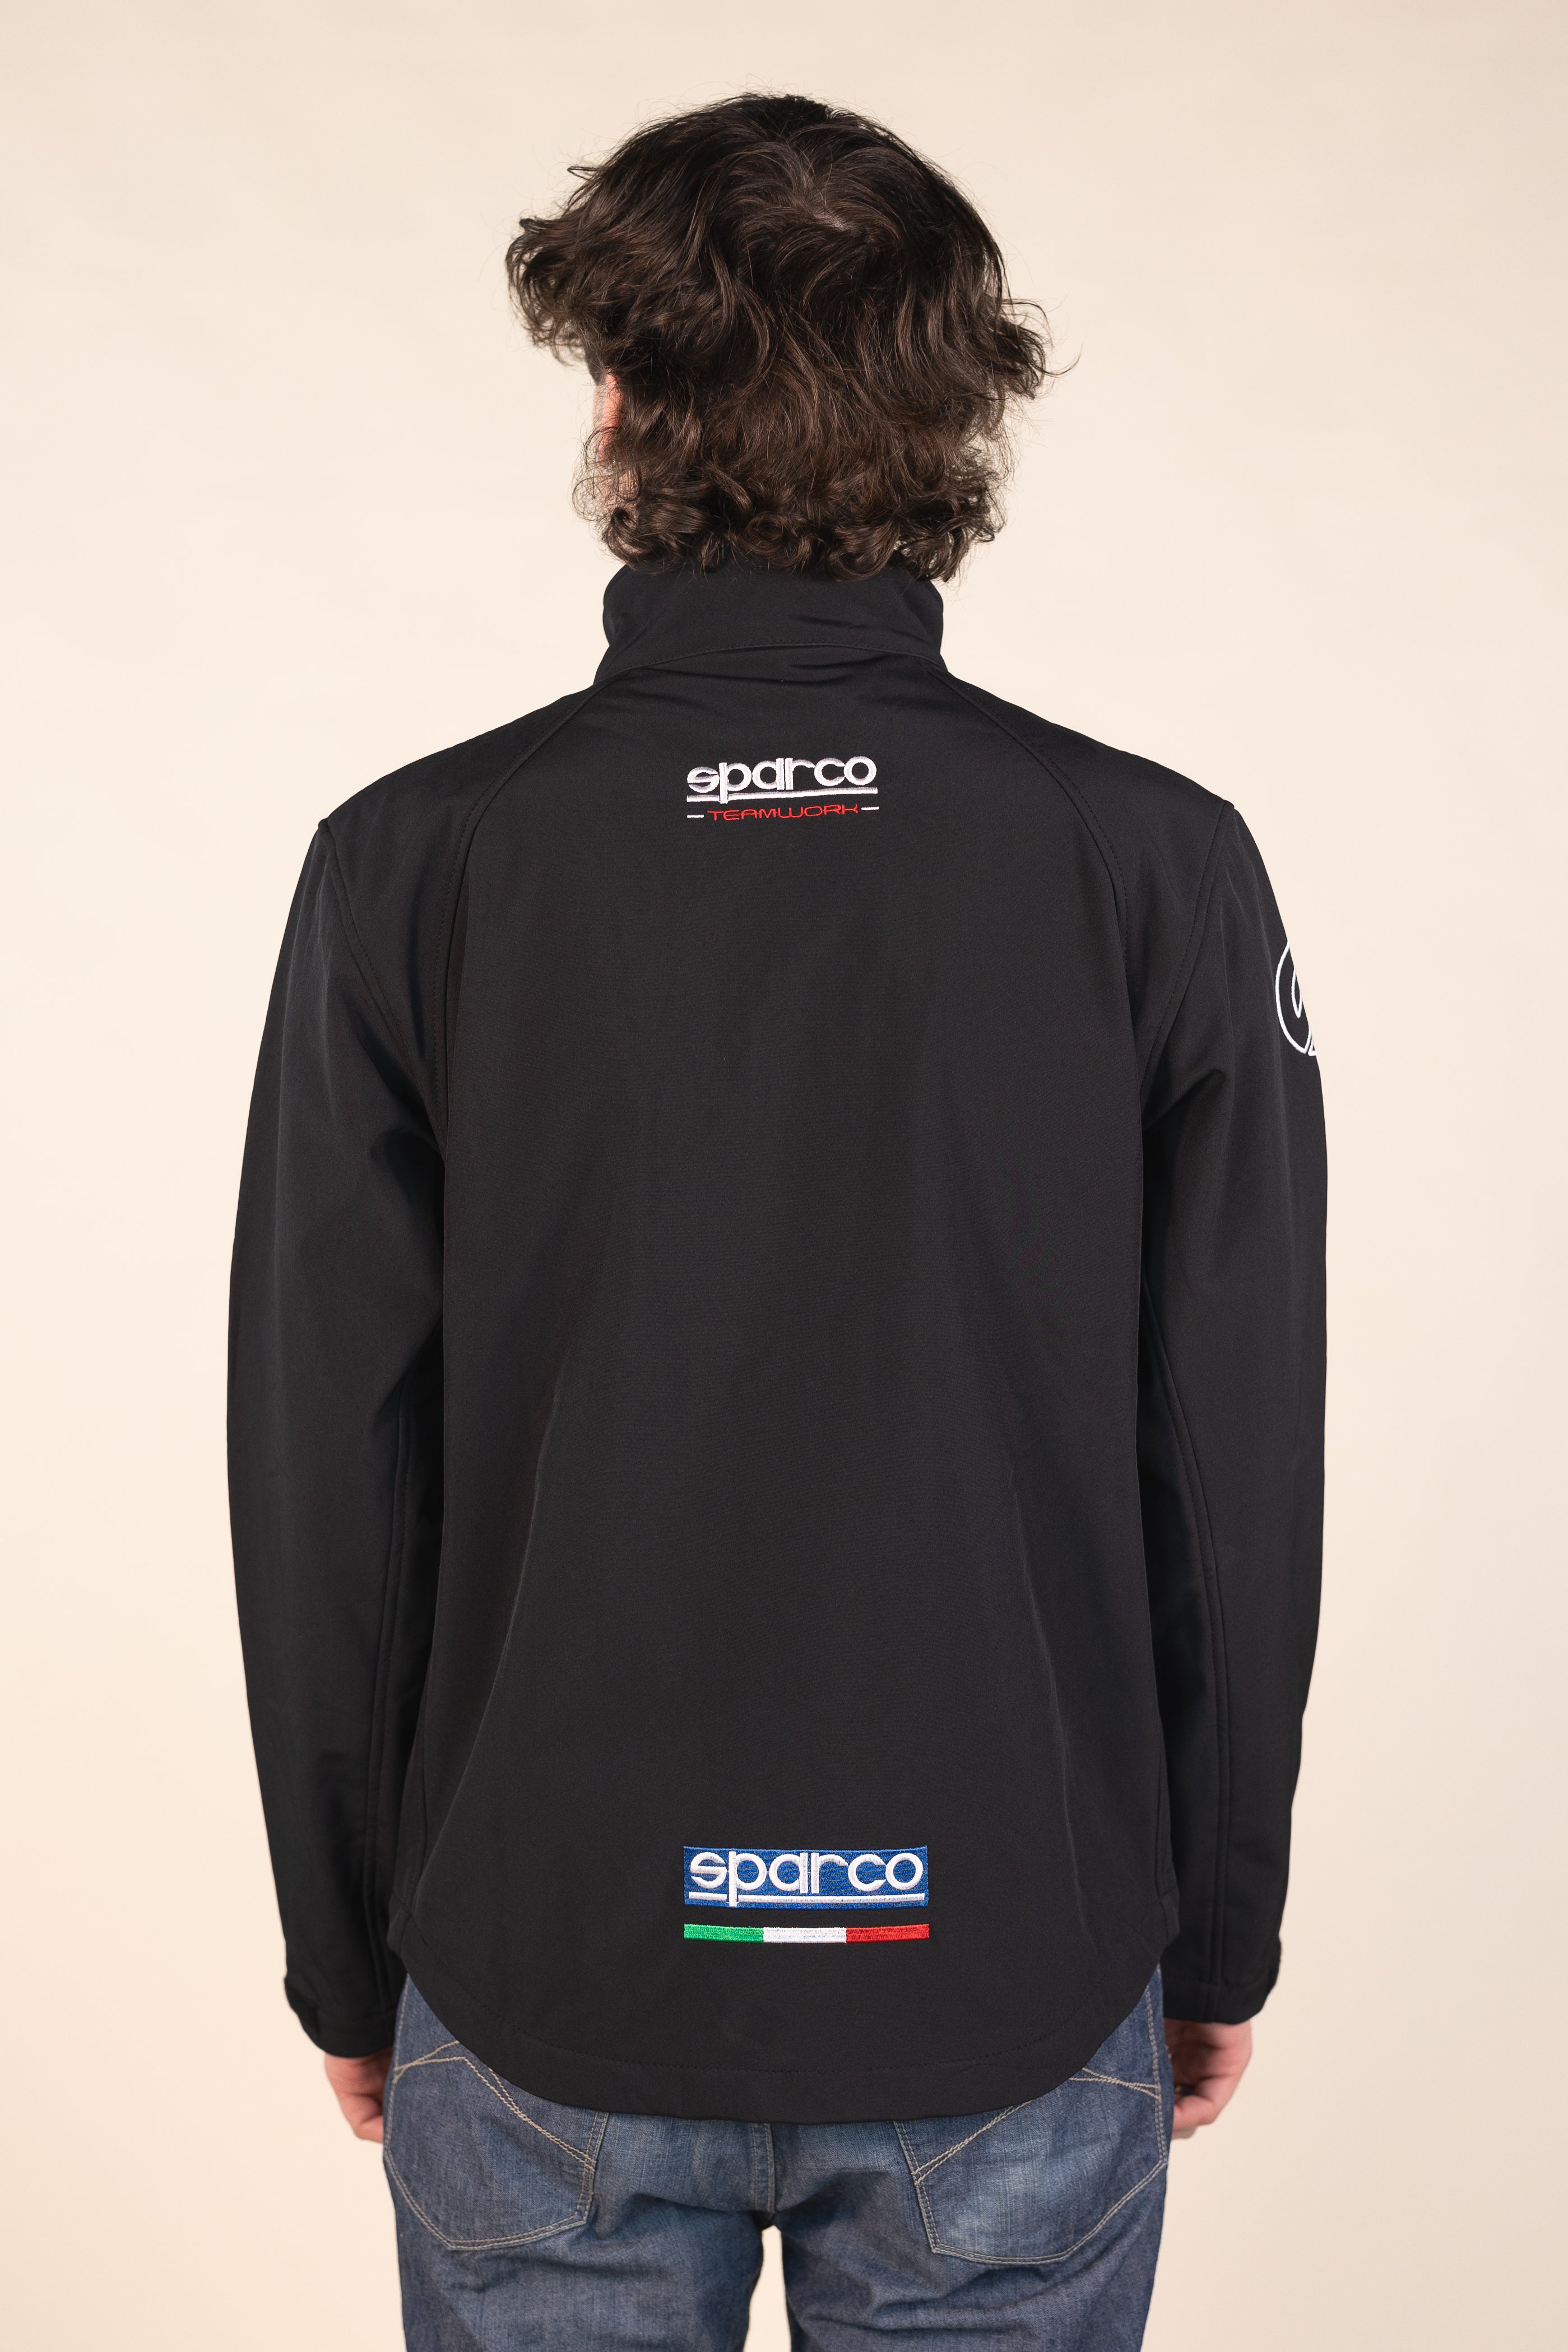 Sparco Race Jacket